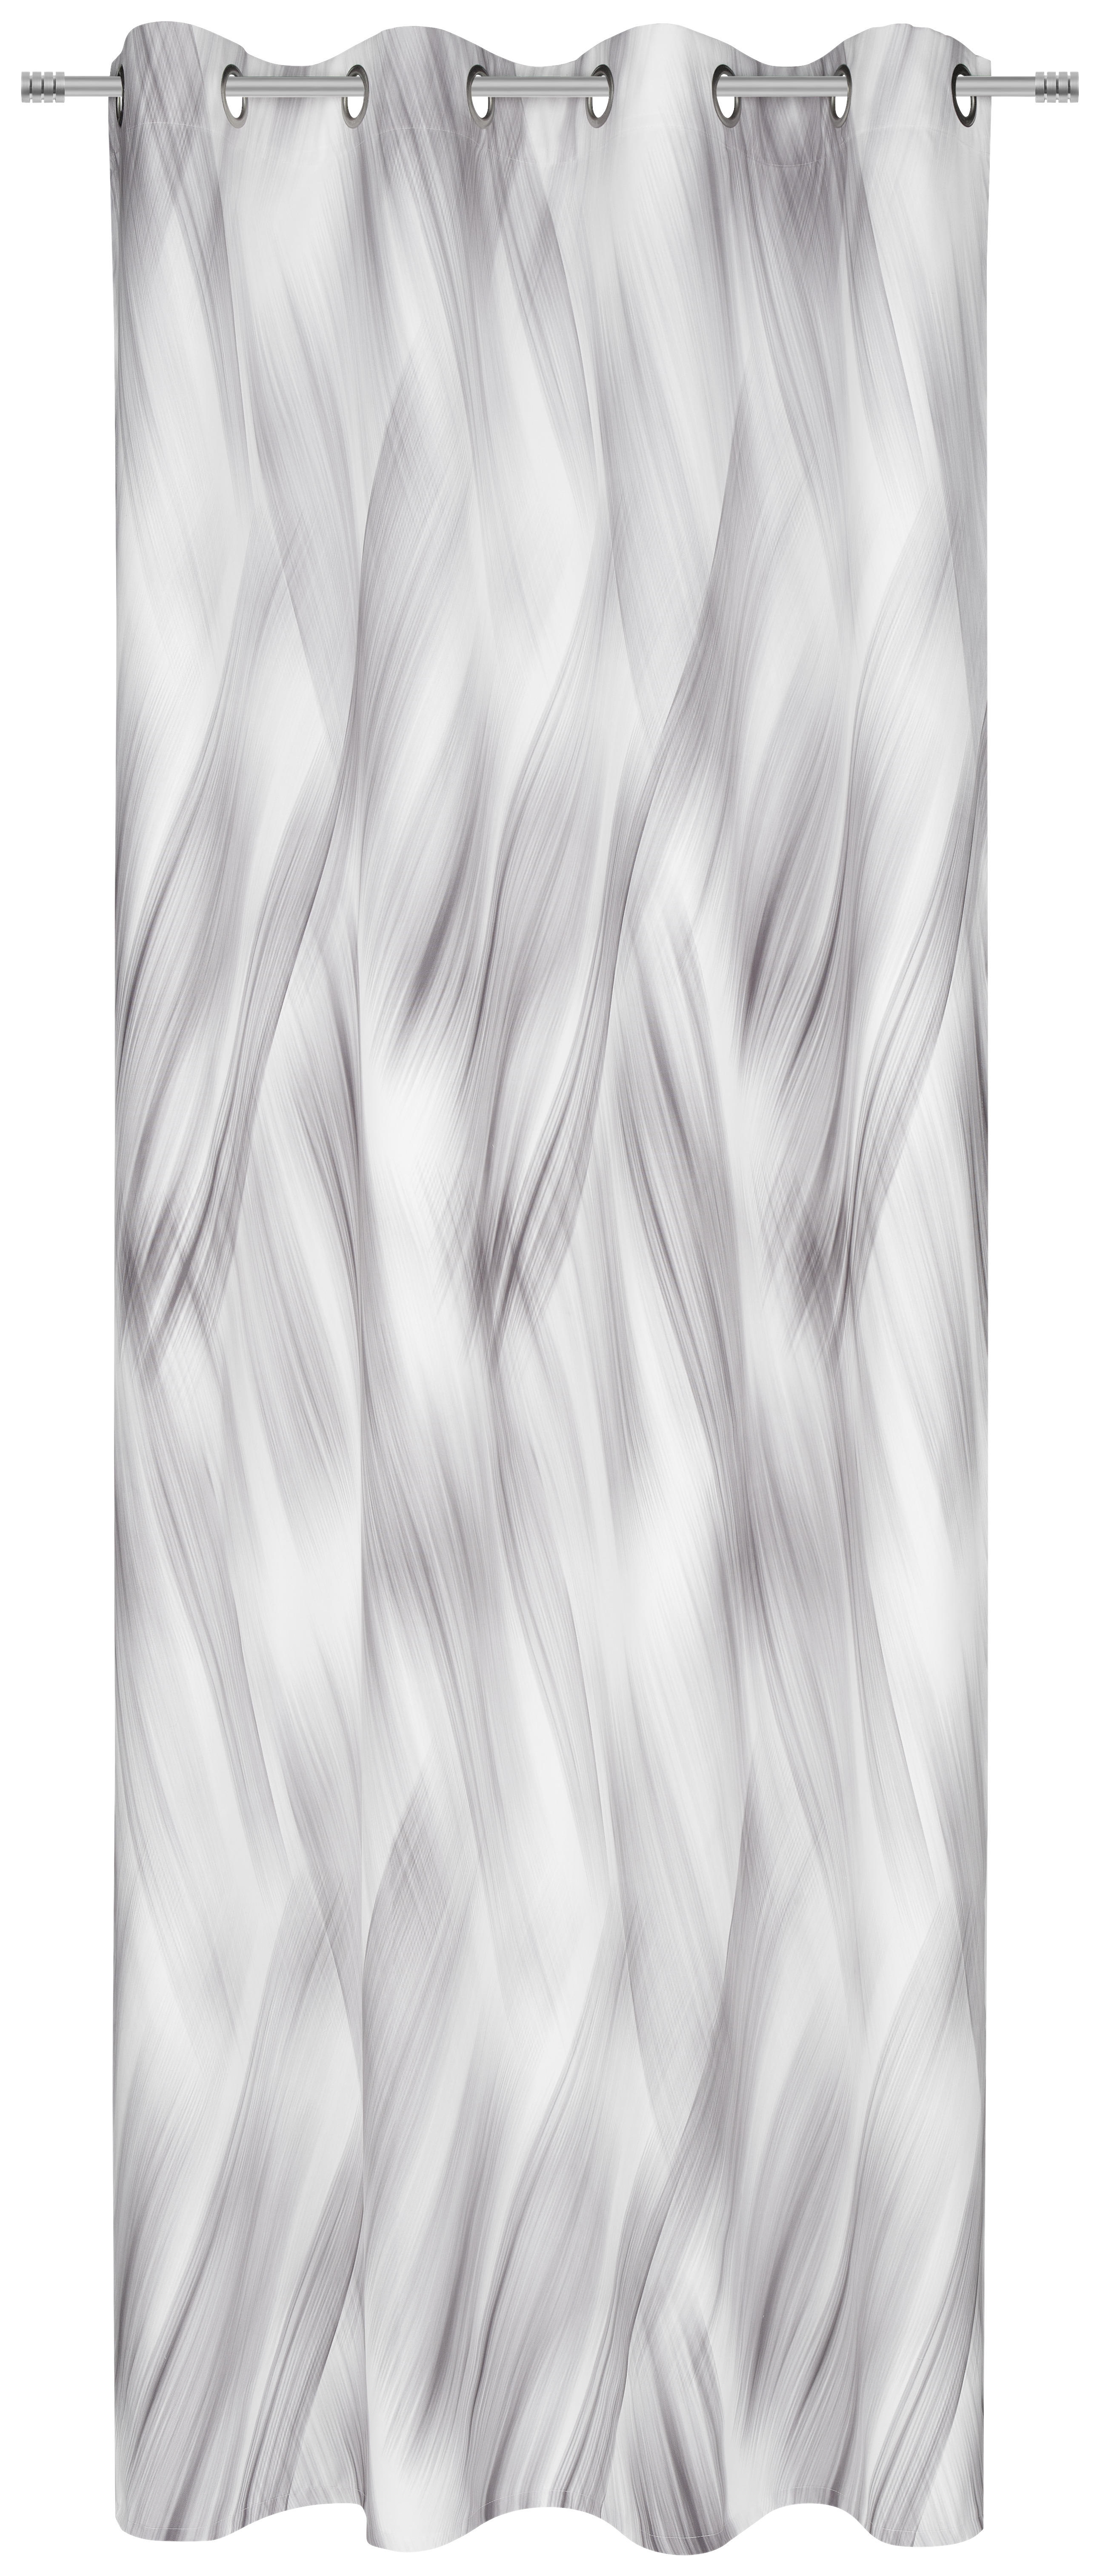 ÖSENSCHAL Gio halbtransparent 140/255 cm   - Silberfarben, Design, Textil (140/255cm) - Novel